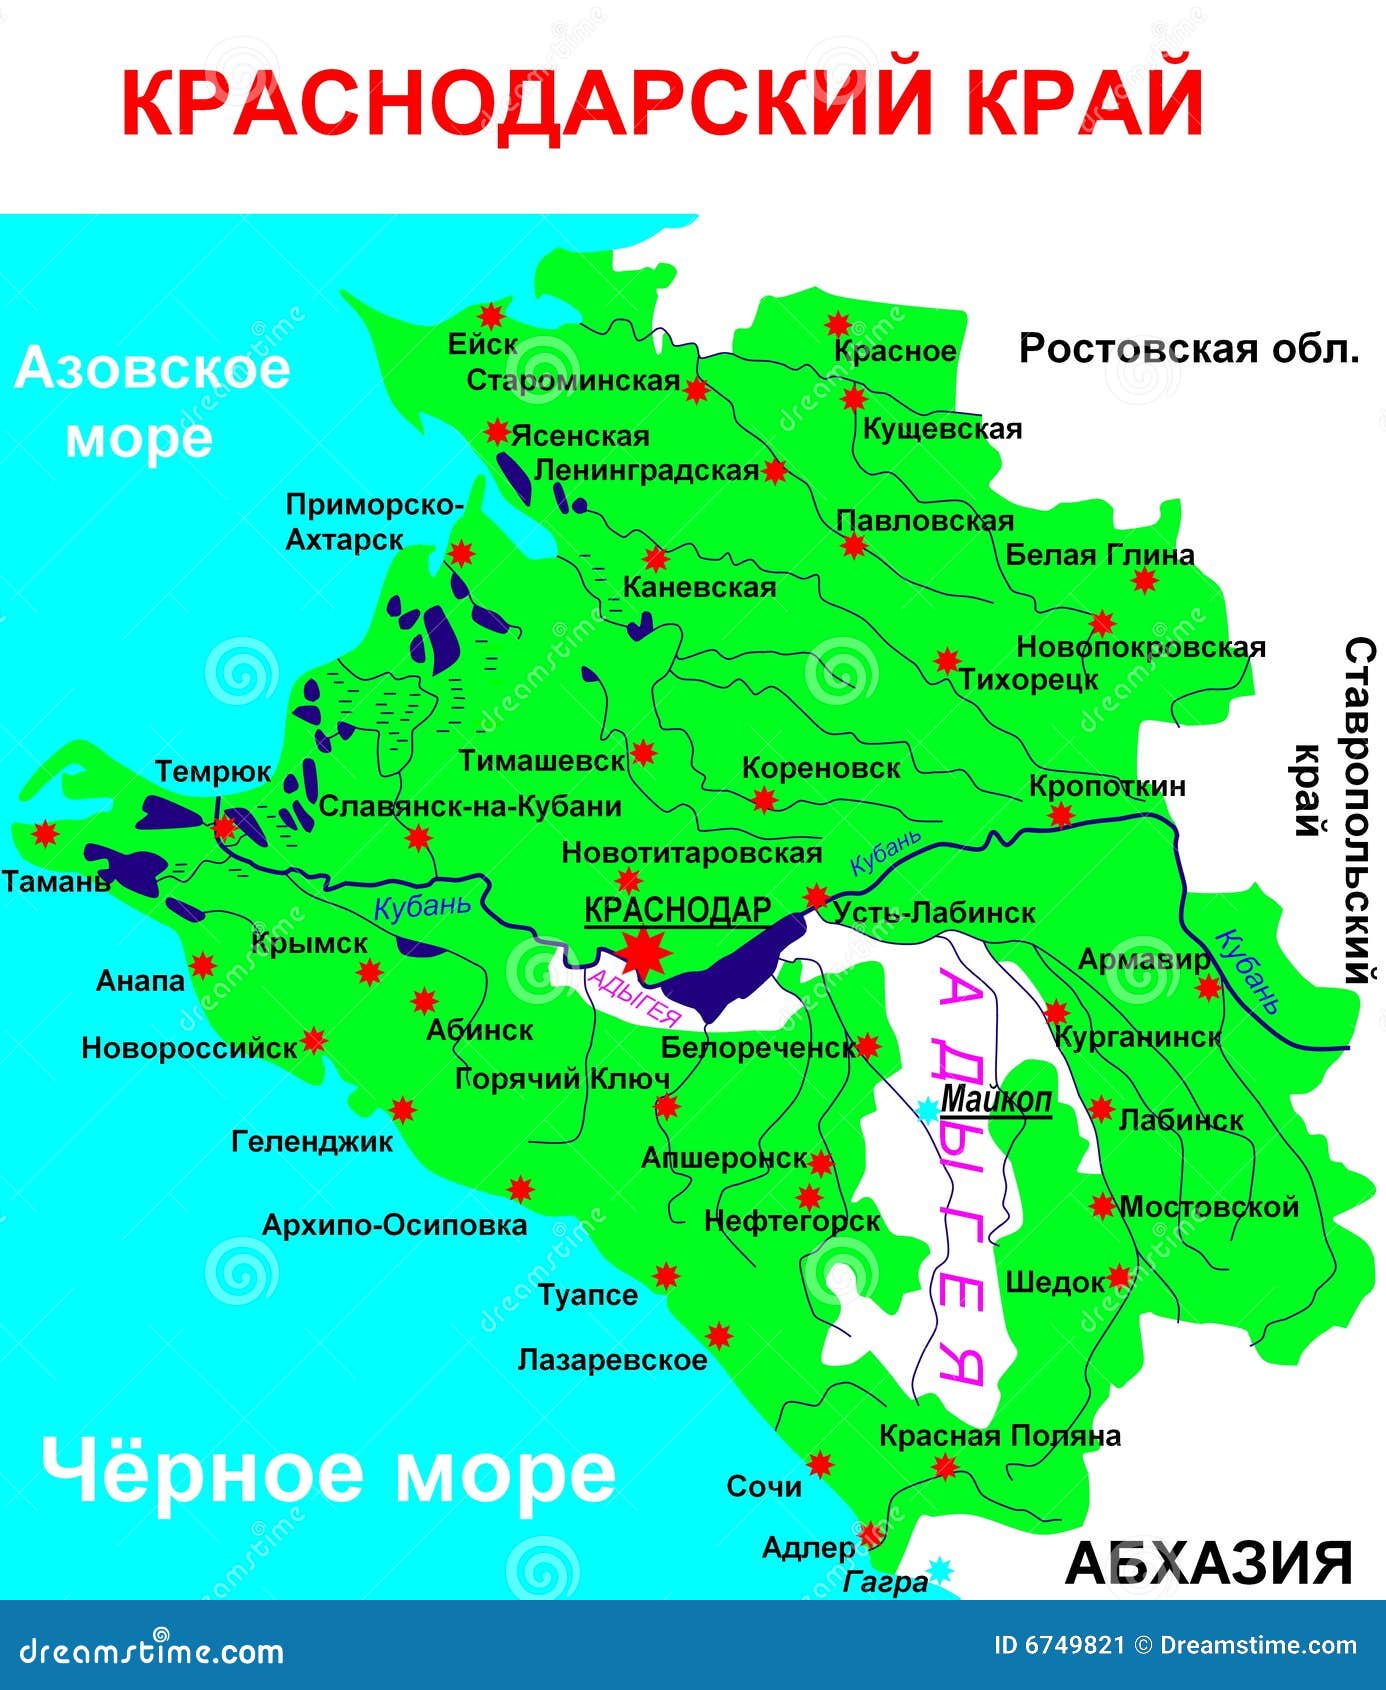 Какой размер краснодарского края. Карта Краснодарского края. Карта Краснодара и Краснодарского края. Адыгея на карте Краснодарского края. Карта достопримечательностей Краснодарского края.